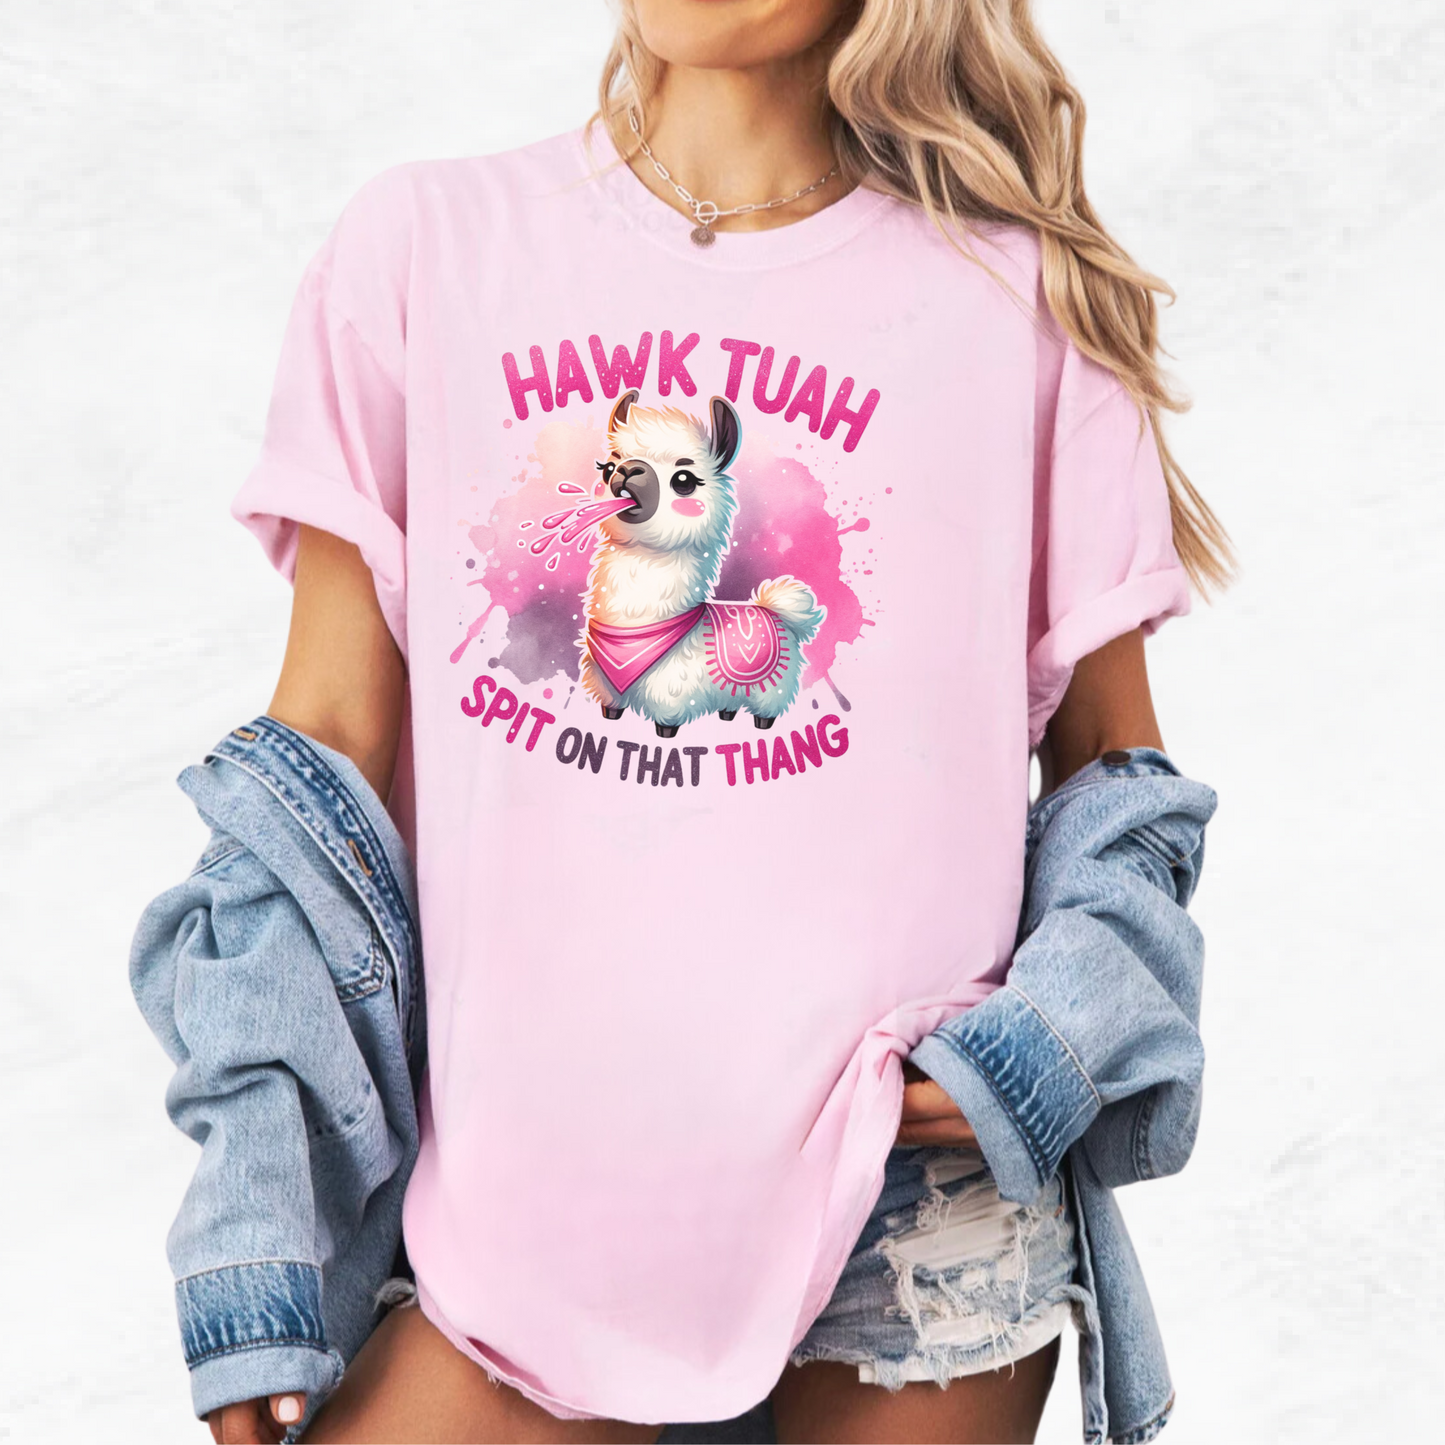 Hawk Tuah, Spit on that Thang Shirt